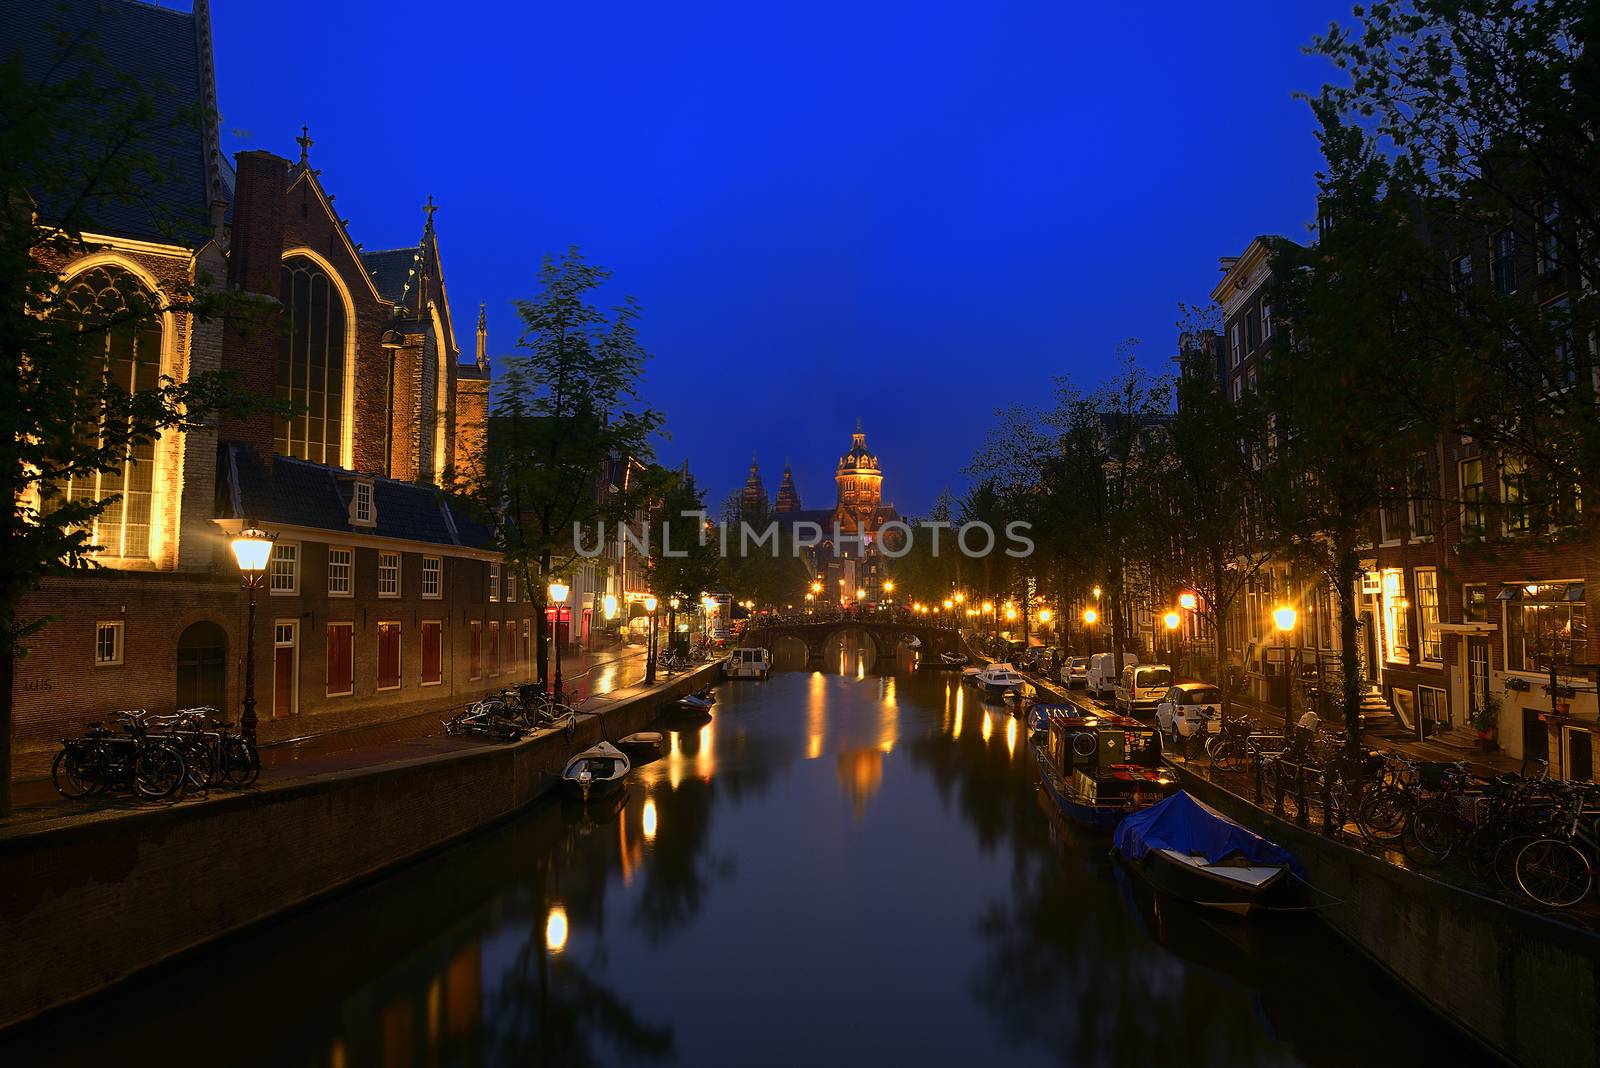 The beautiful romantic city of amsterdam by night